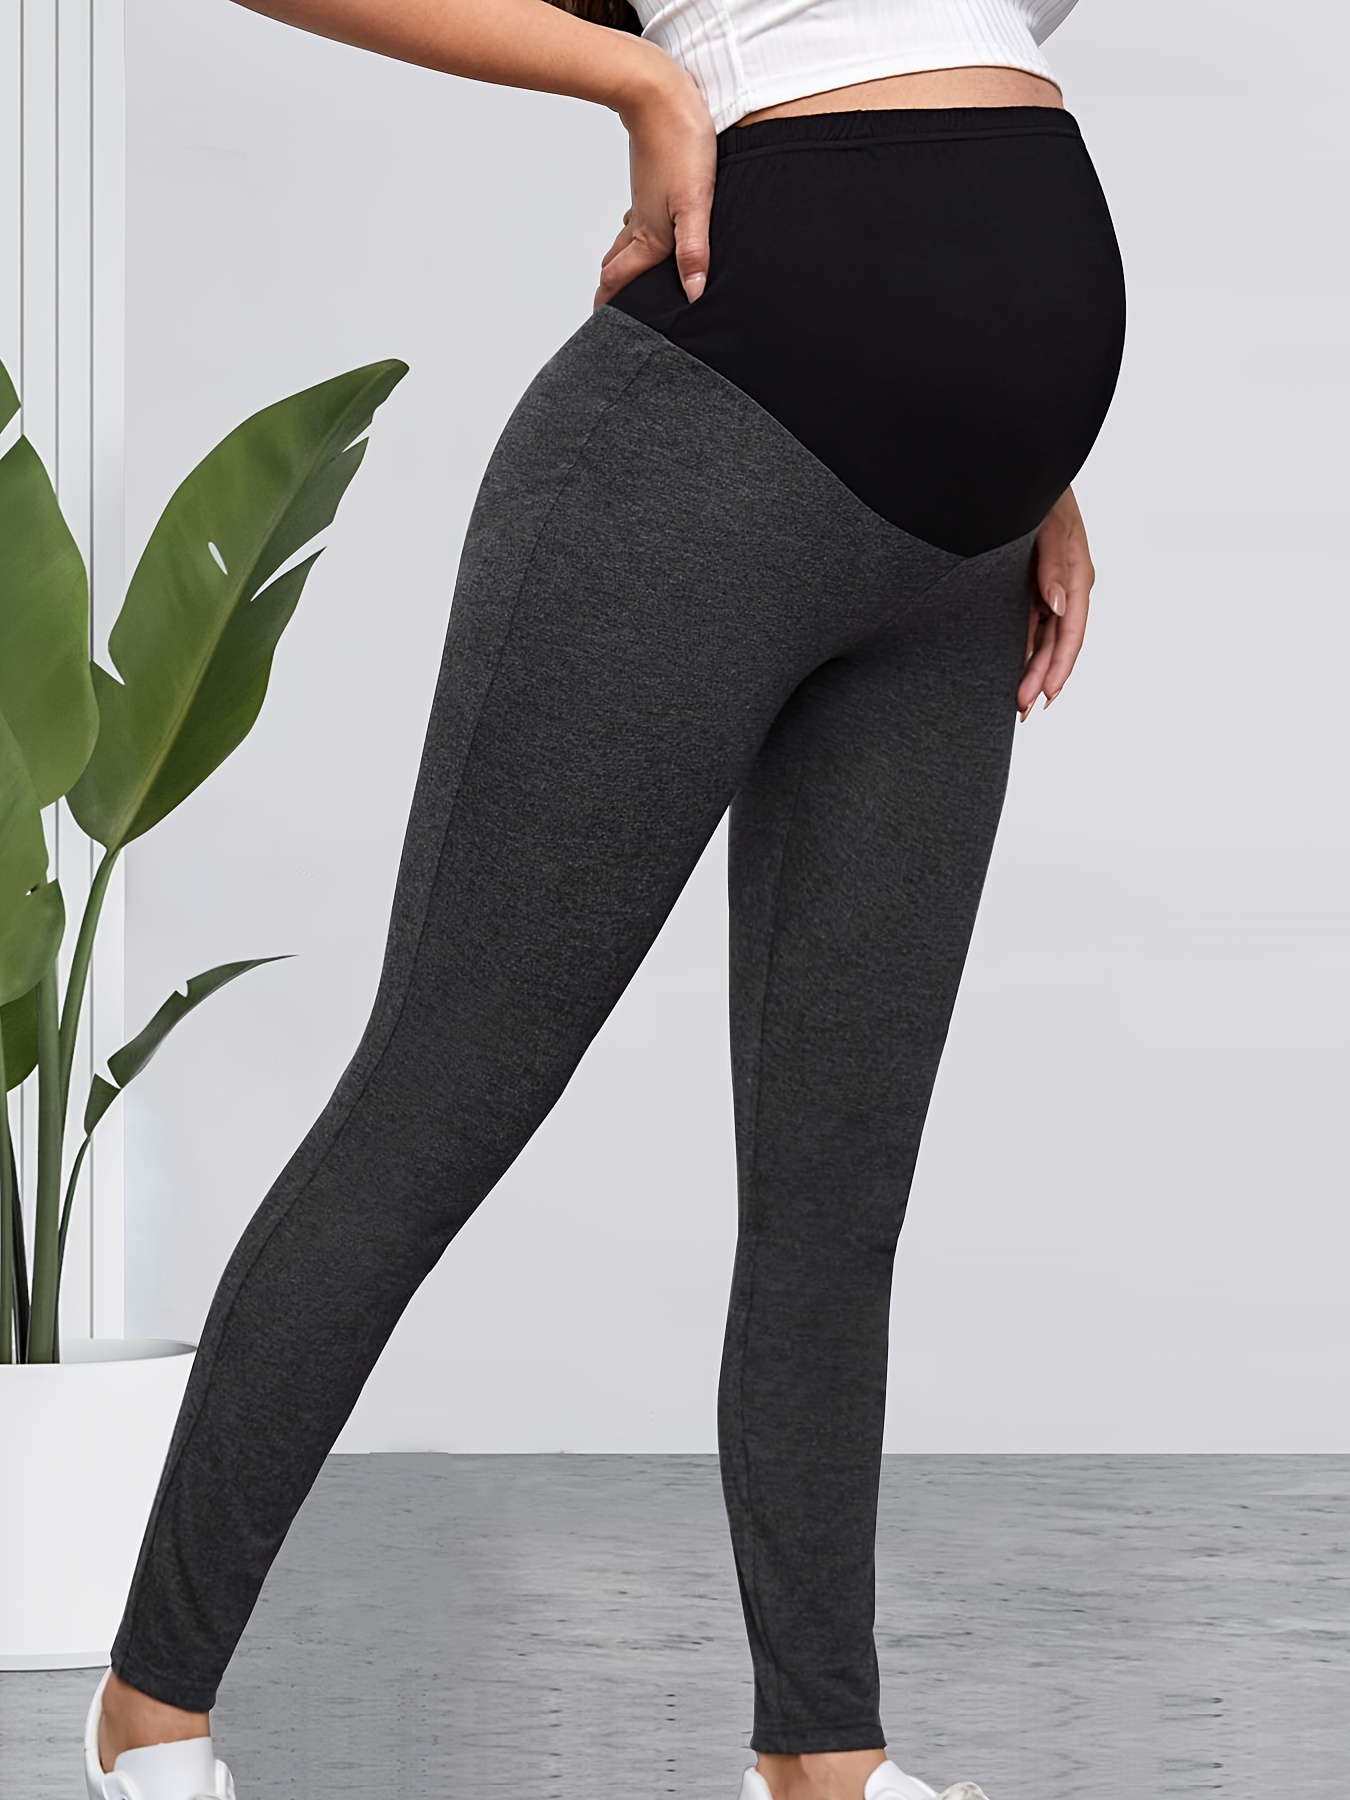 Pantalones de mezclilla para mujer, leggings para embarazadas